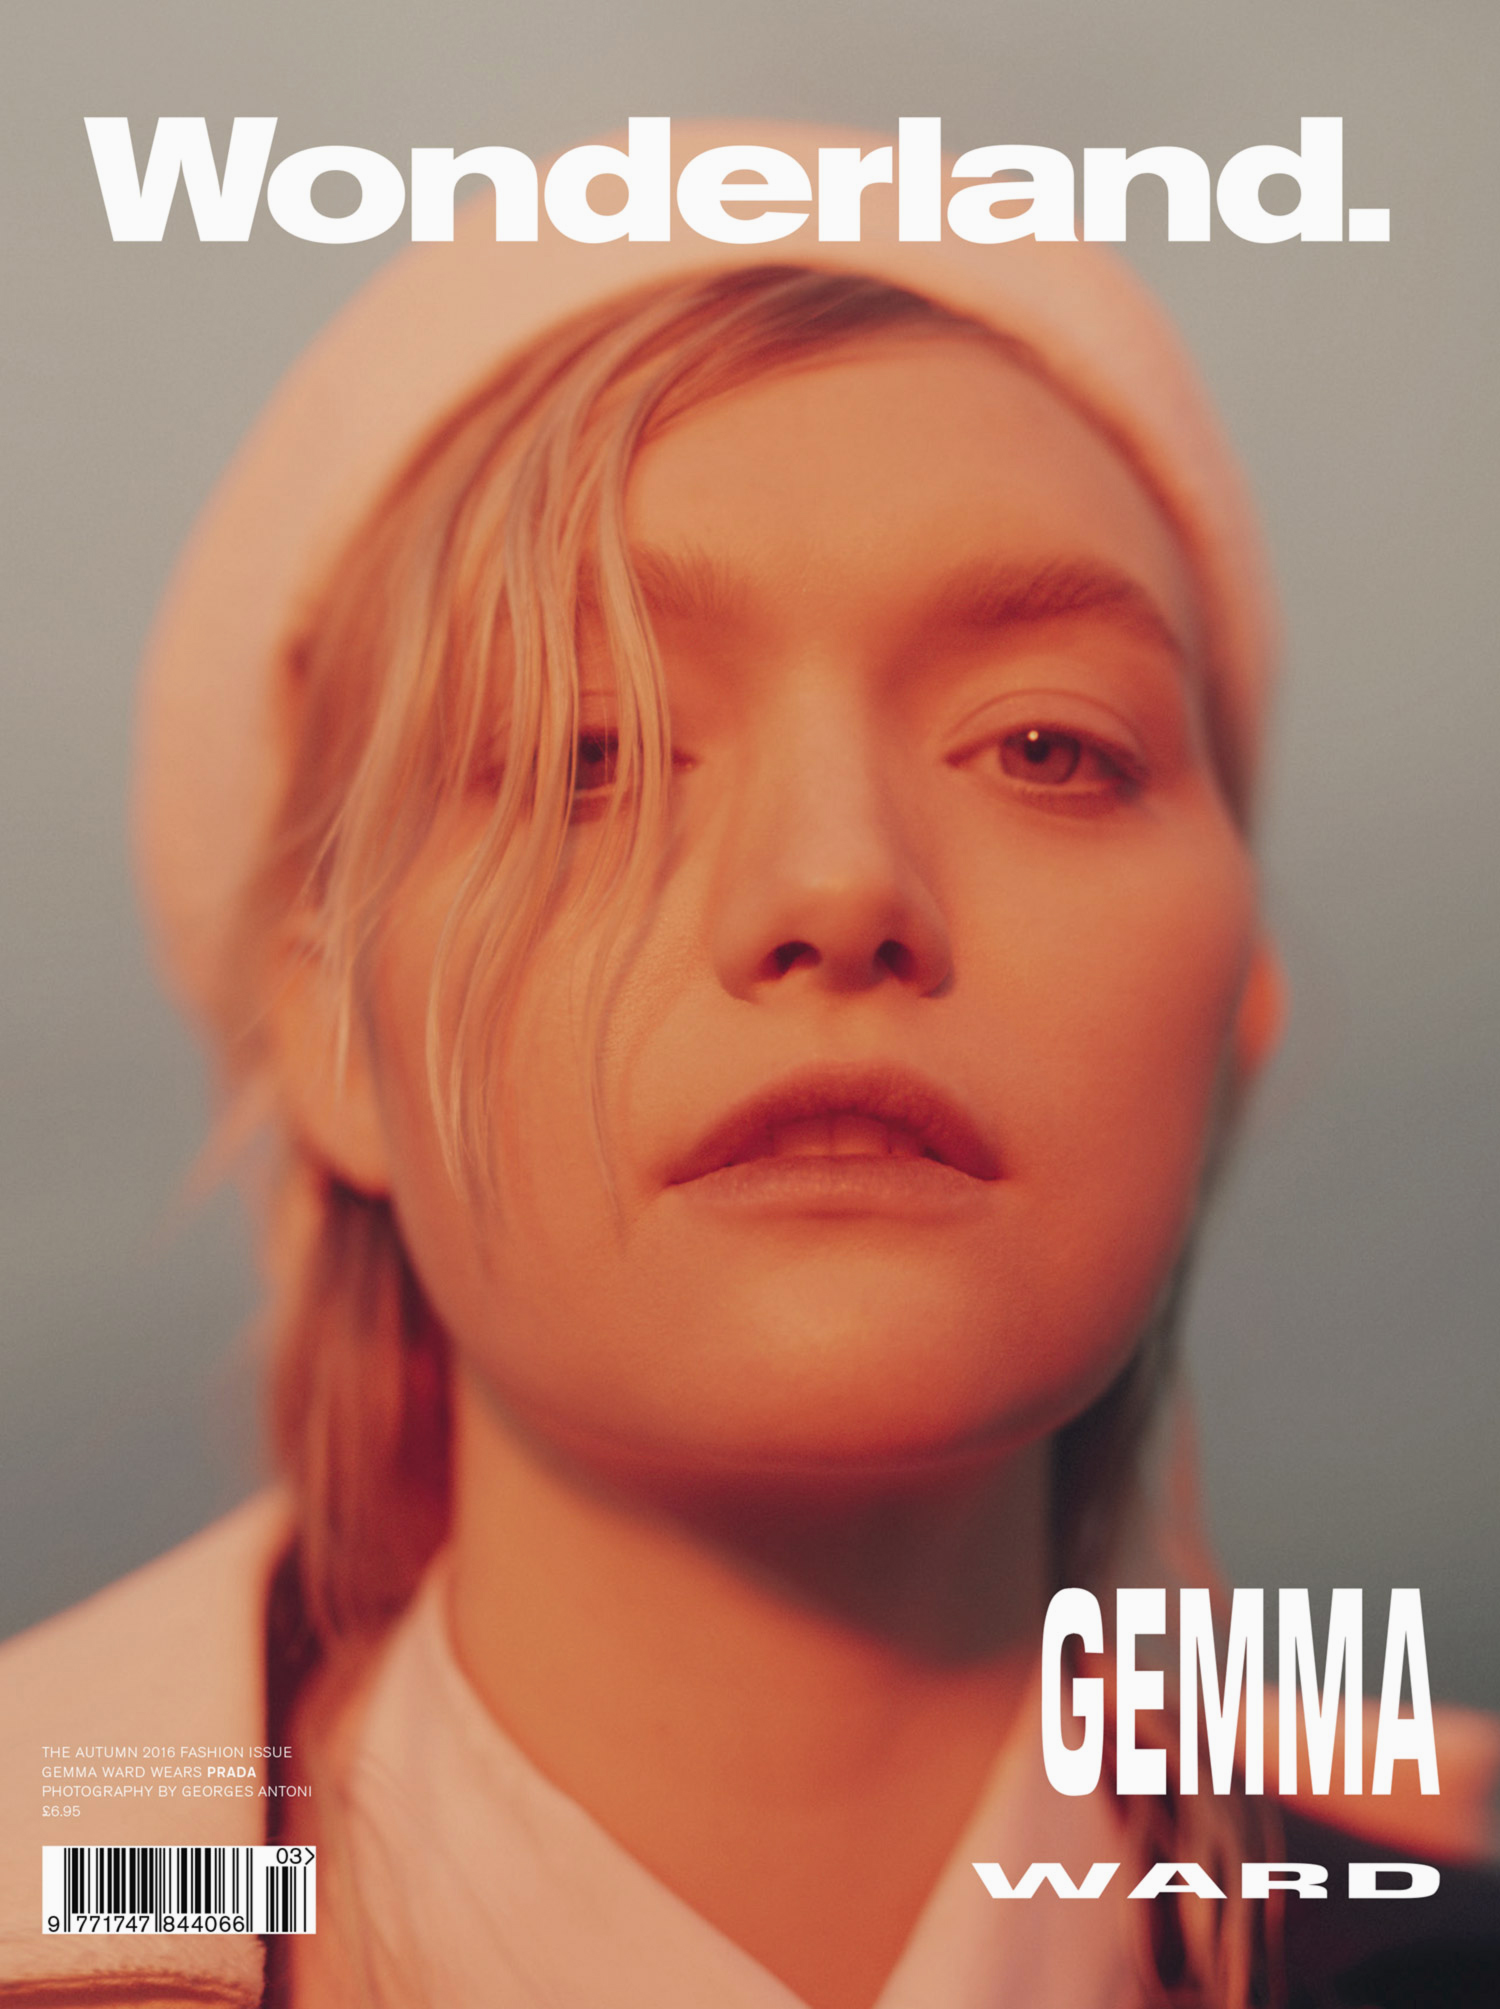 Gemma-Wonderland-Cover-Option-Original.jpg